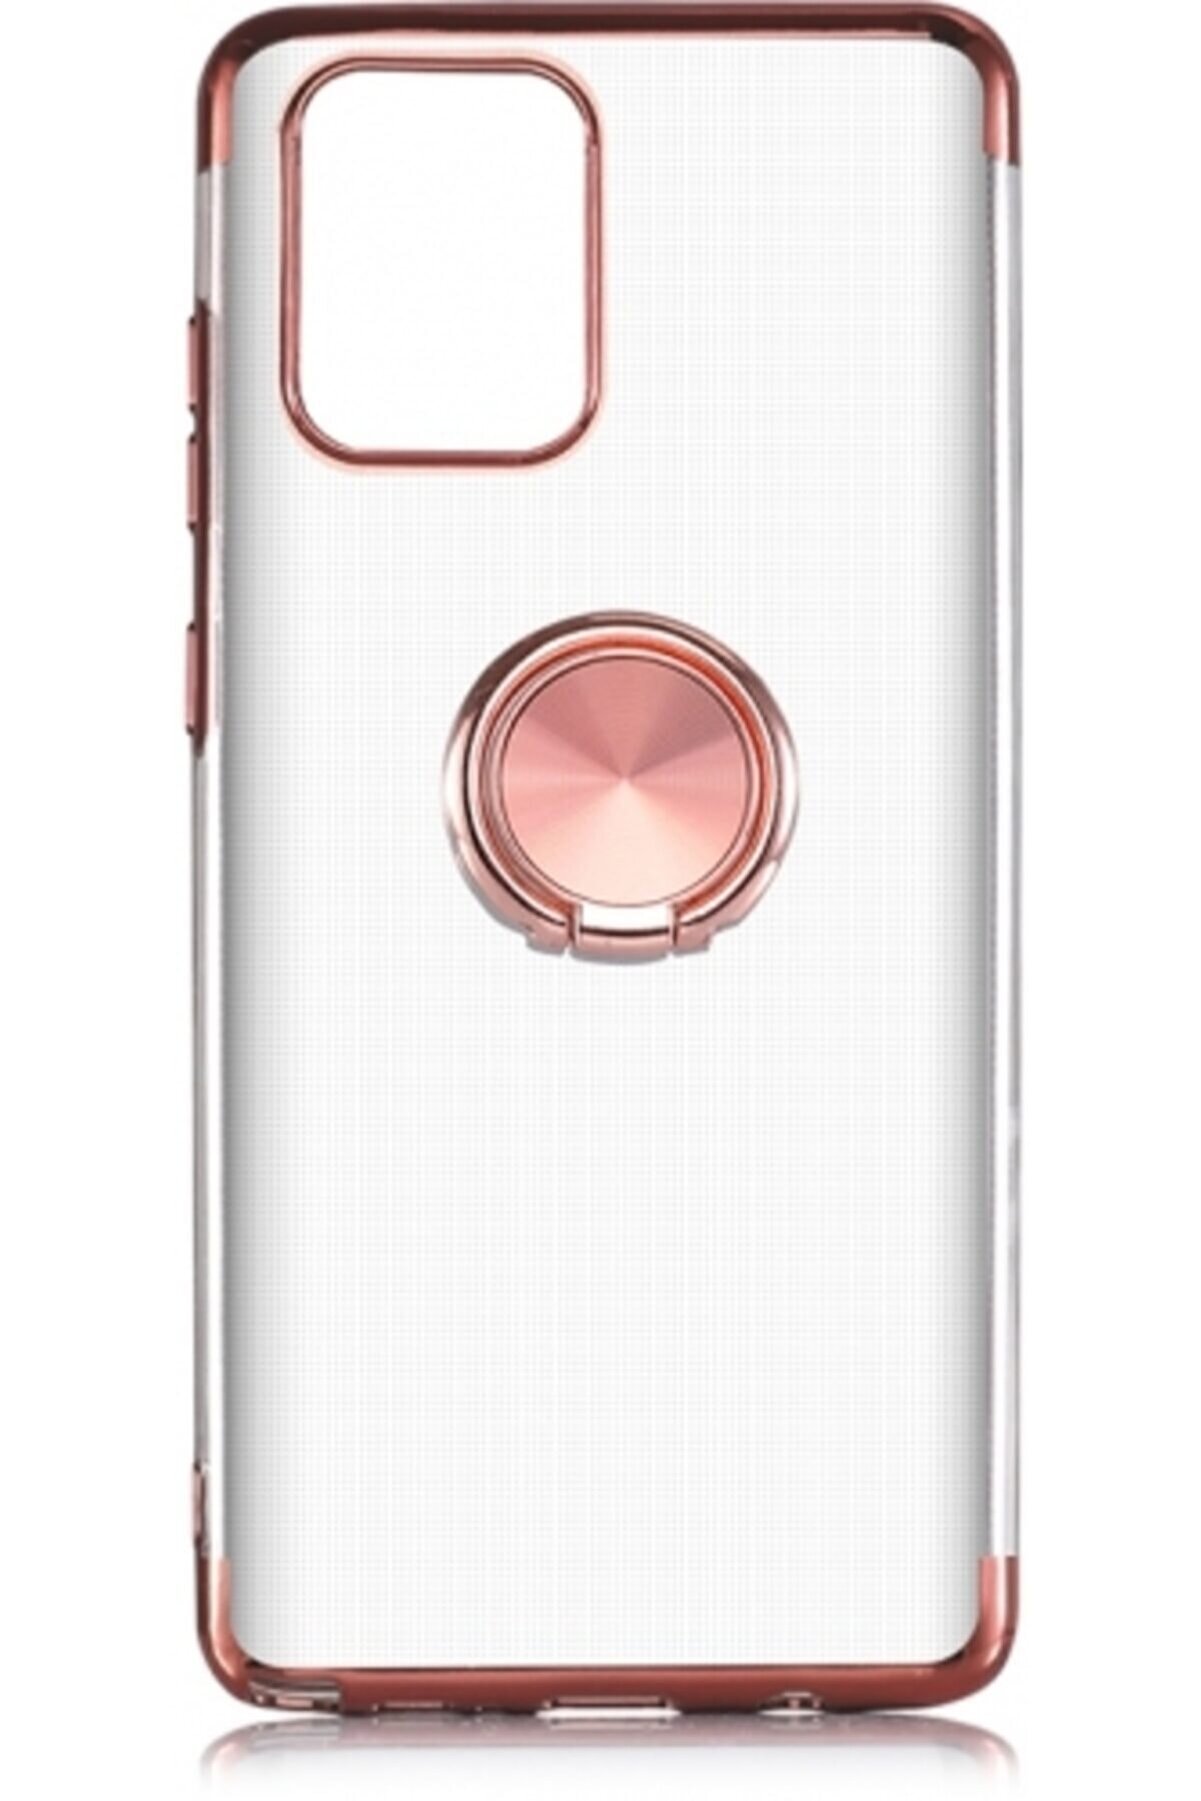 Kilifplus Samsung Galaxy Note 10 Lite Kılıf Renkli Yüzüklü Standlı Şeffaf Esnek Silikon - Rose Gold